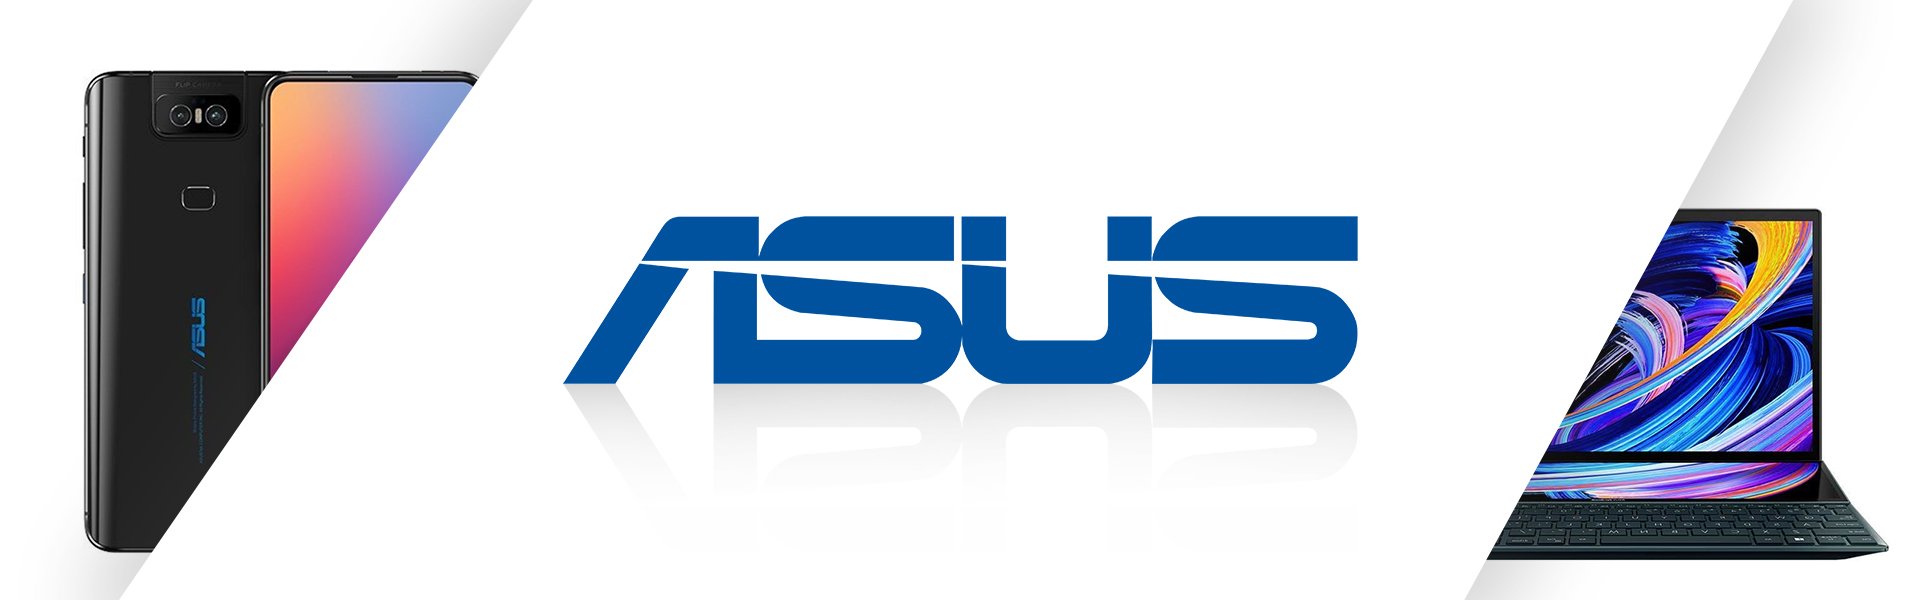 Asus D543MA (D543MA-DM785) Asus 